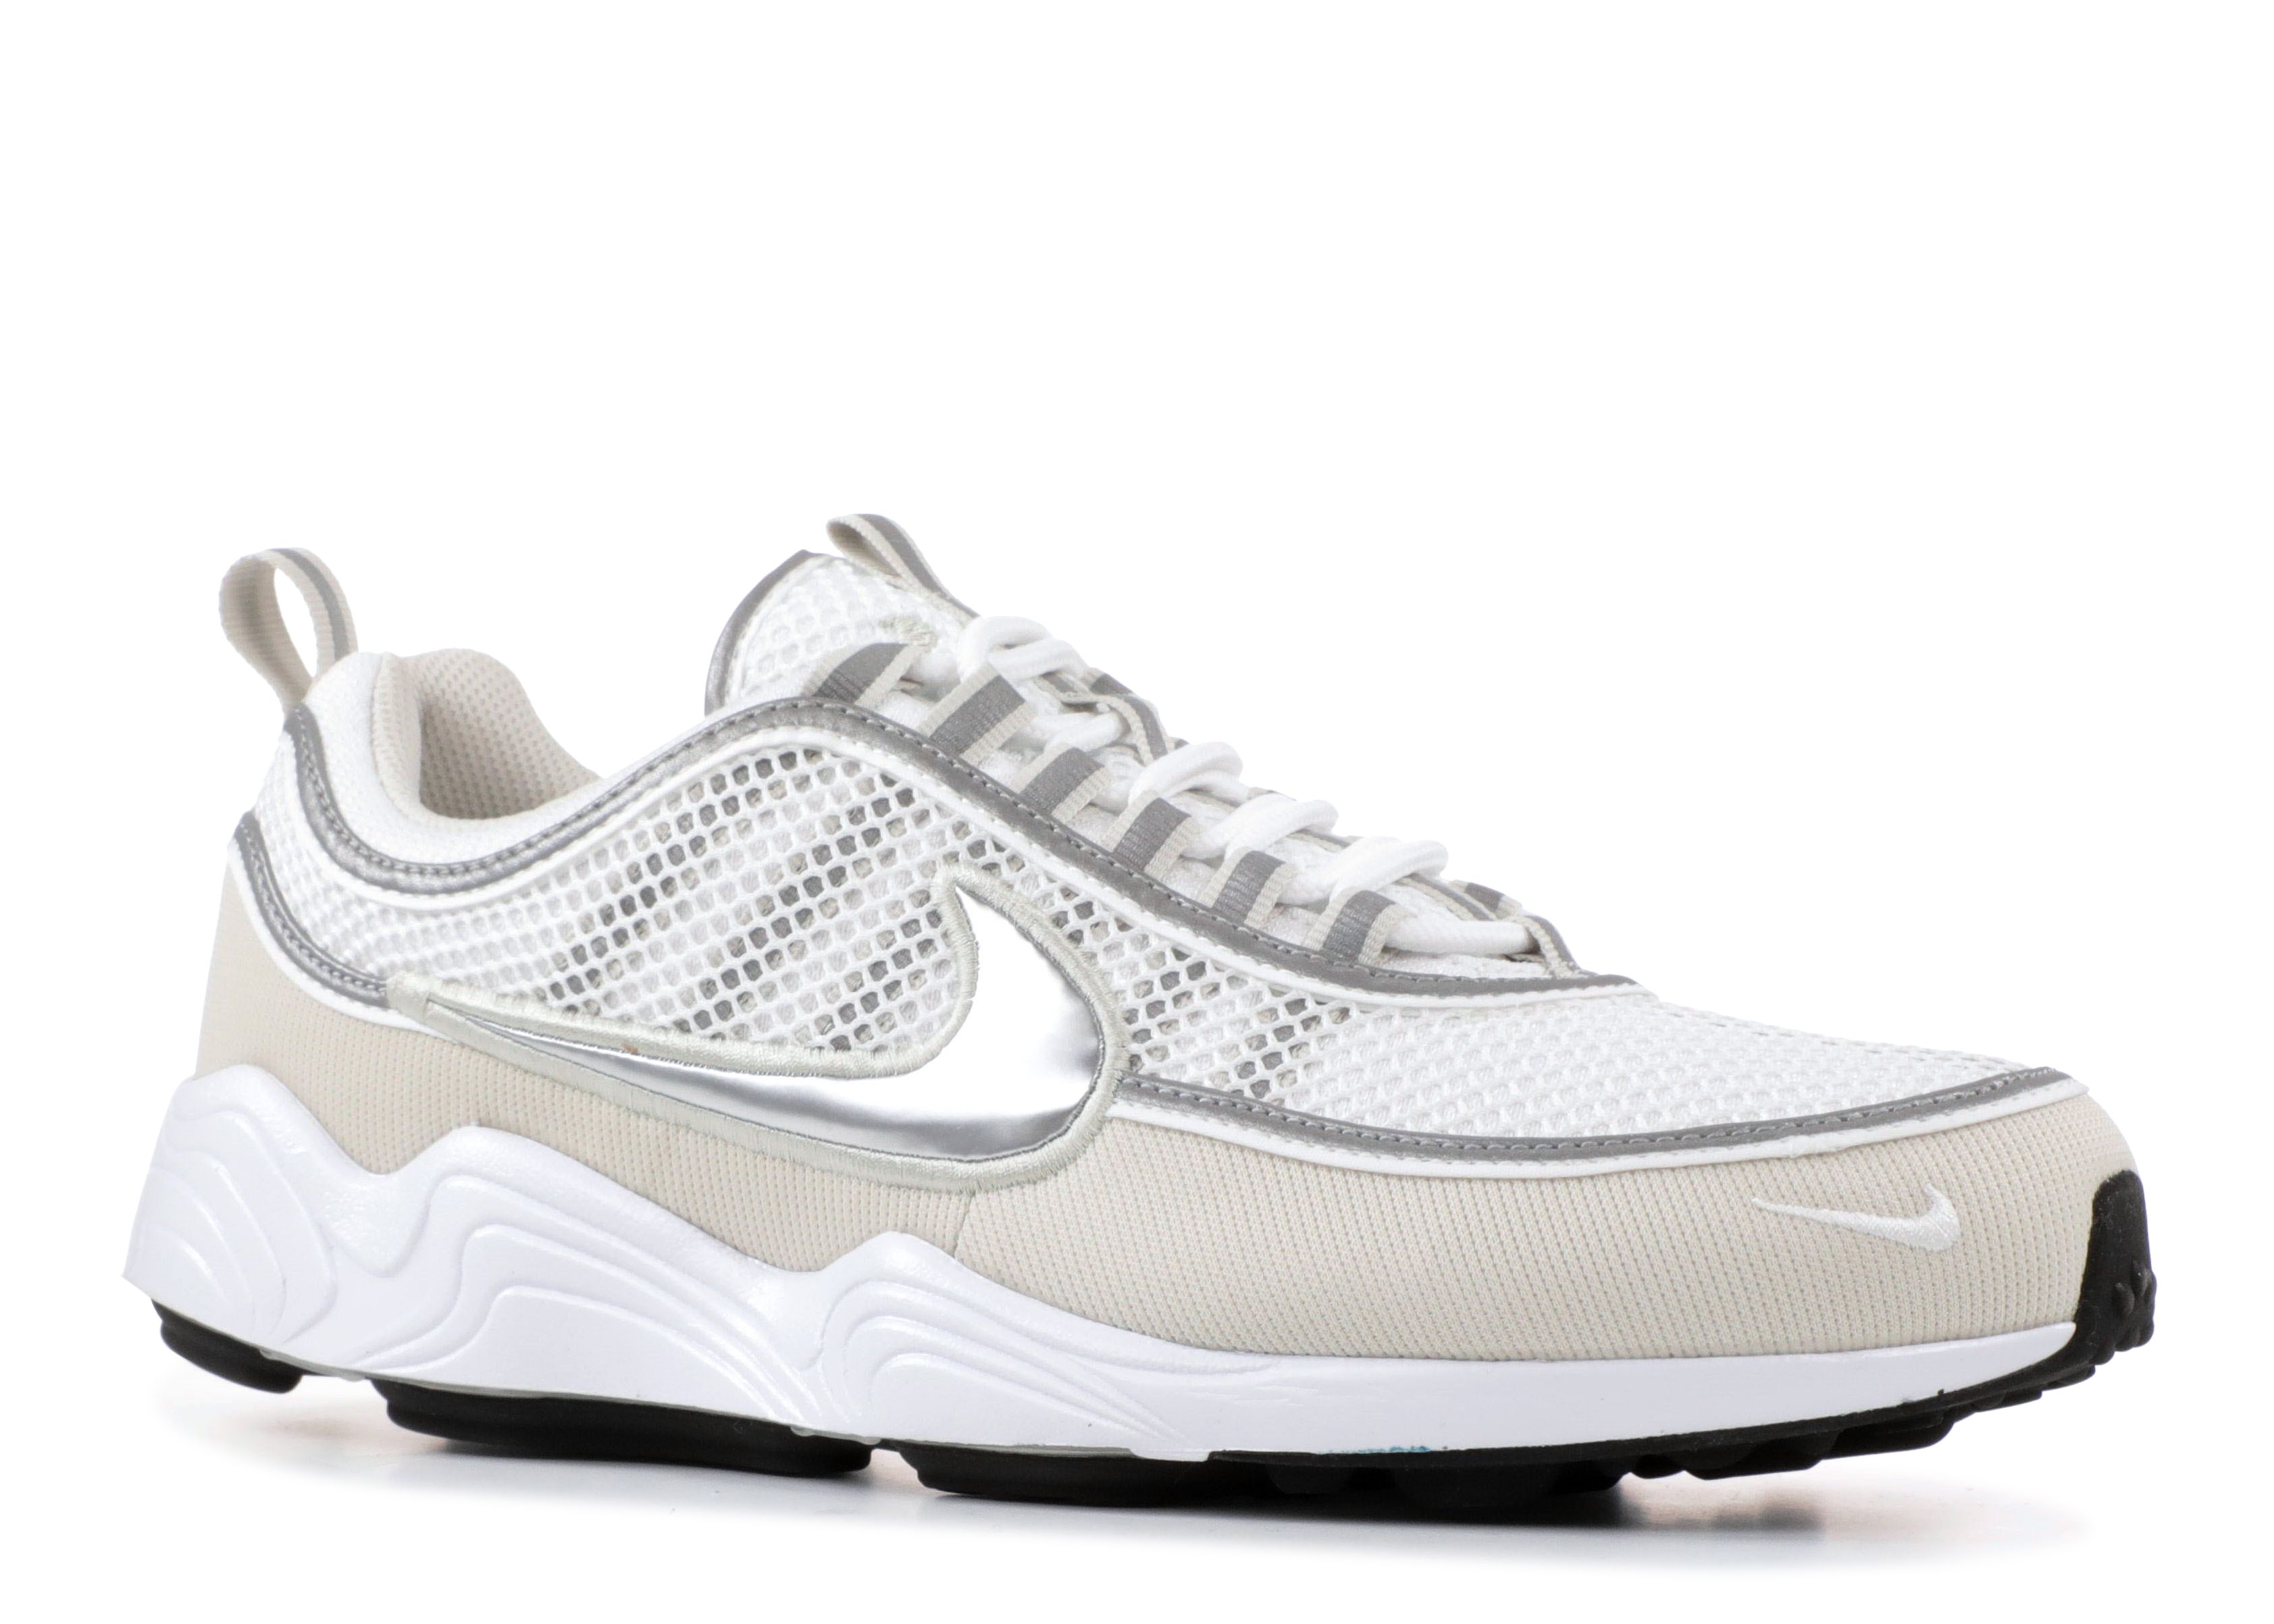 Zoom Spiridon 16 'Cream' - Nike - 926955 105 white/metallic silver | Flight